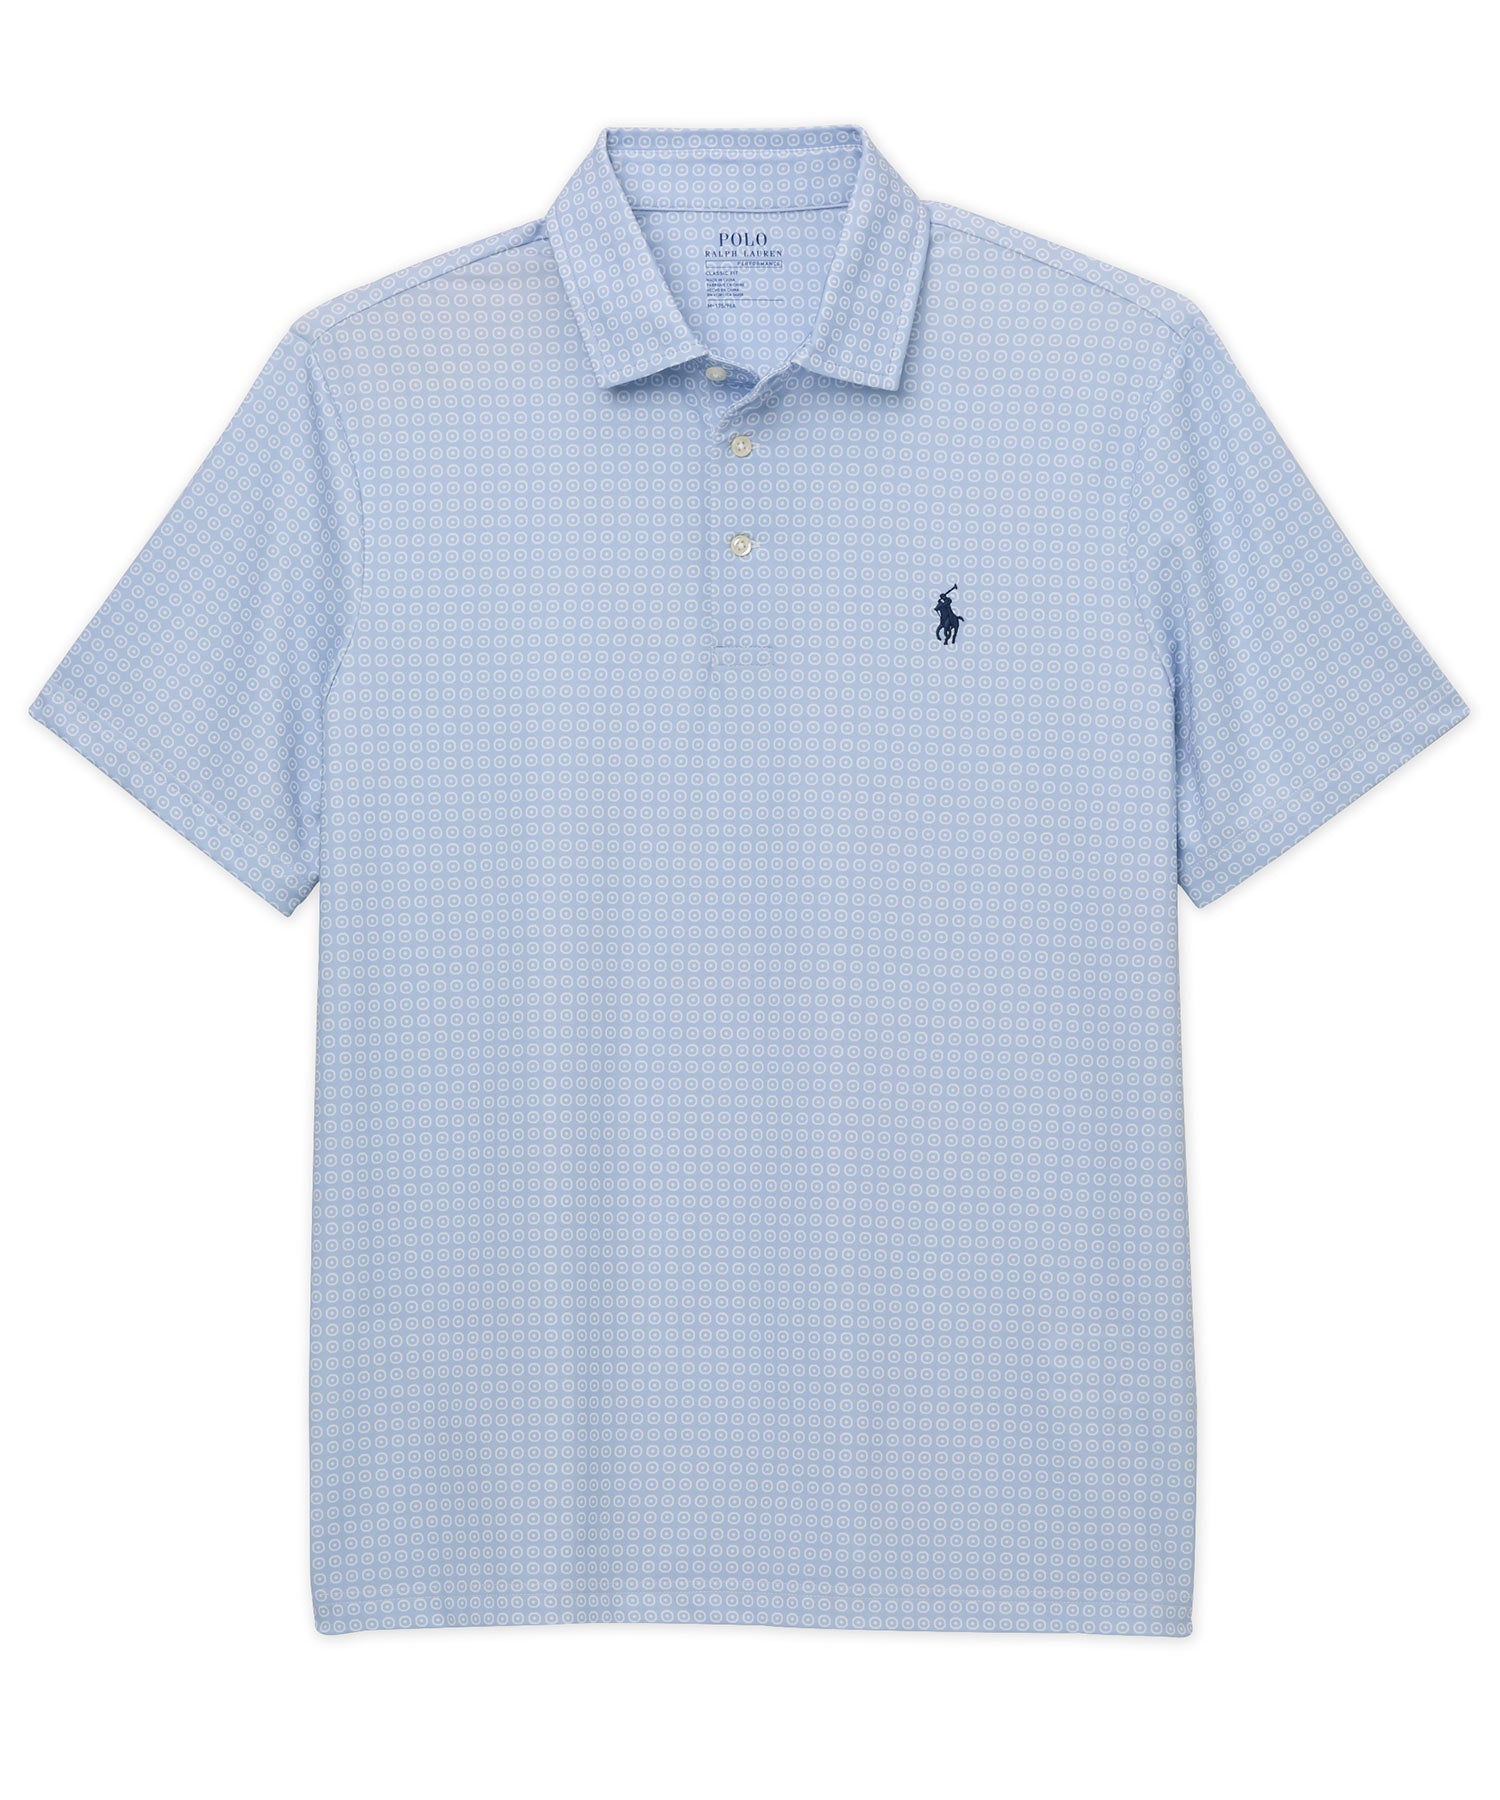 Polo Ralph Lauren Player Logo Slub Long Sleeve Henley Top in Blue